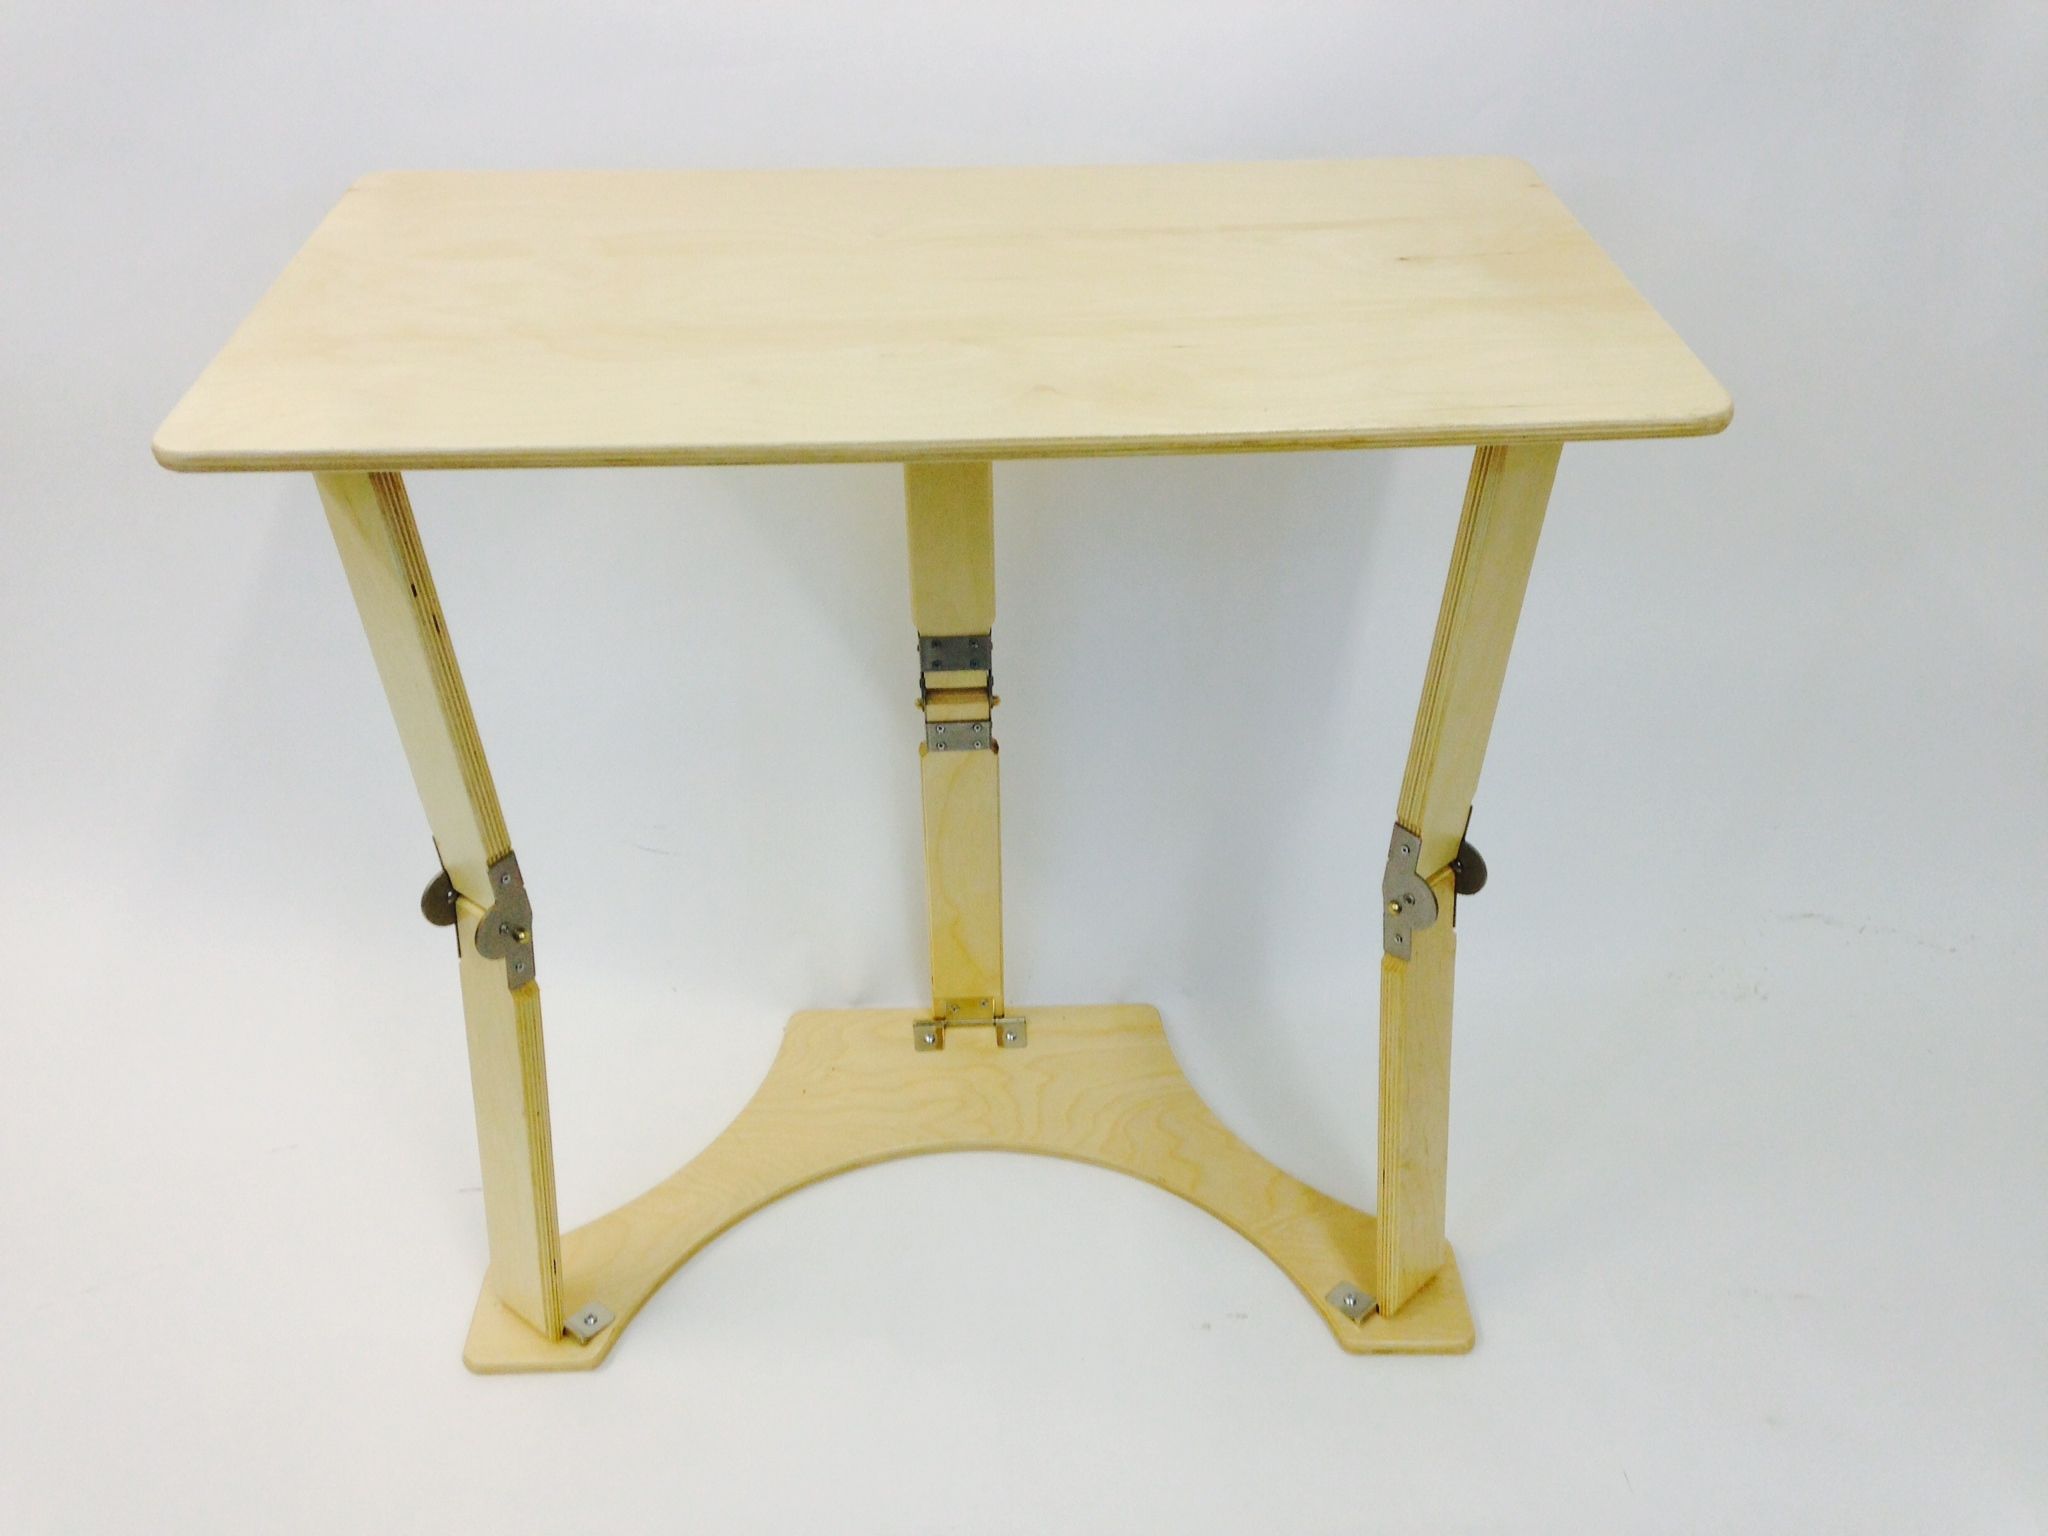 Ld1527-nb Small Folding Laptop Desk-tray Table - Natural Finish